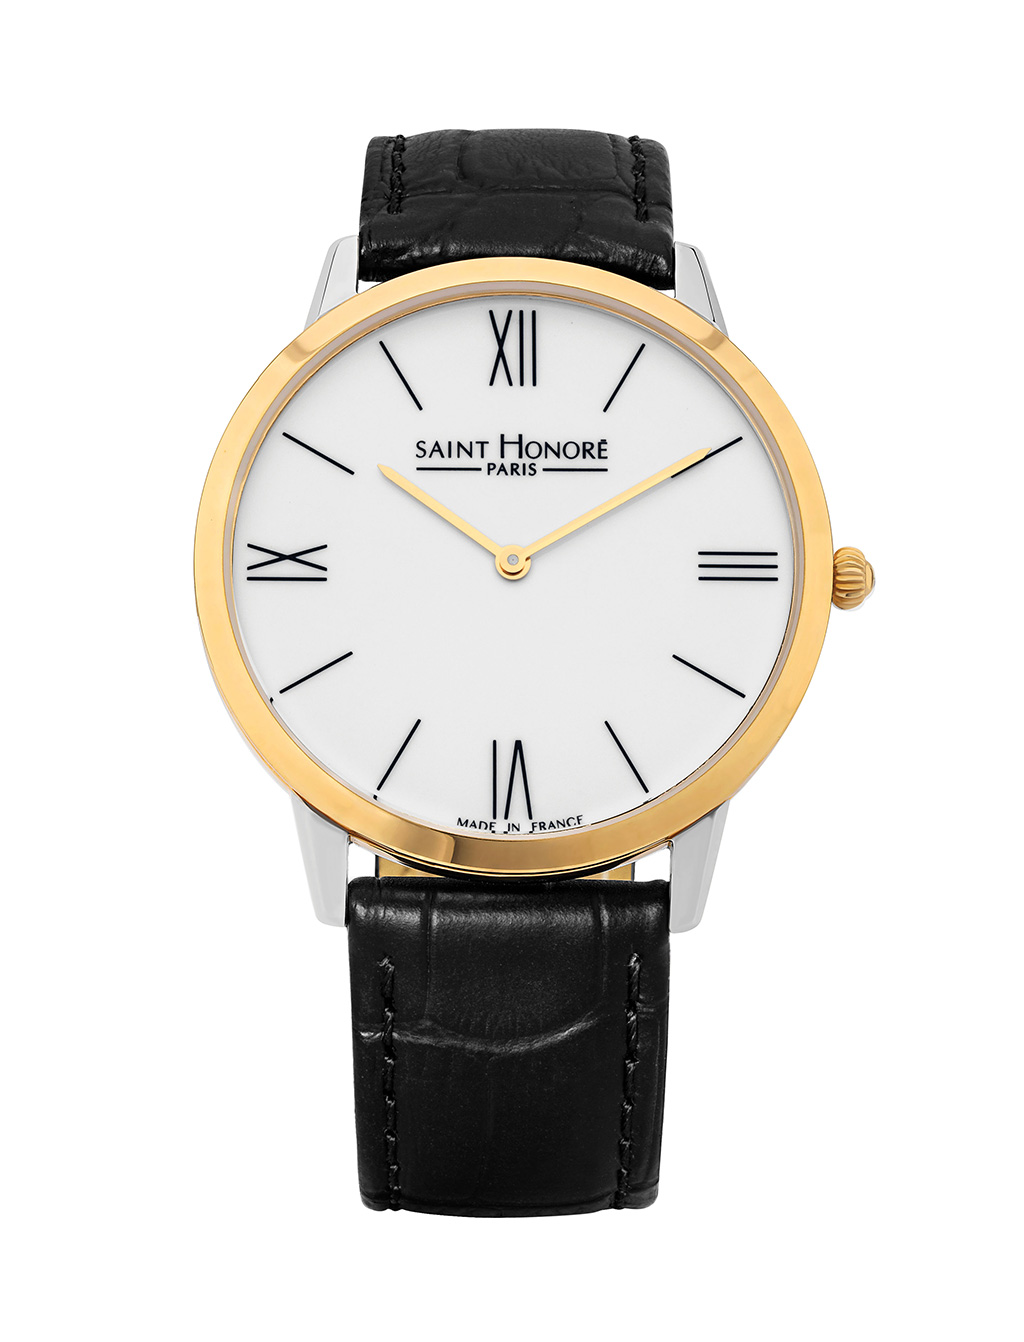 WAGRAM Men's watch - Two-tone case, white dial, black leather strap